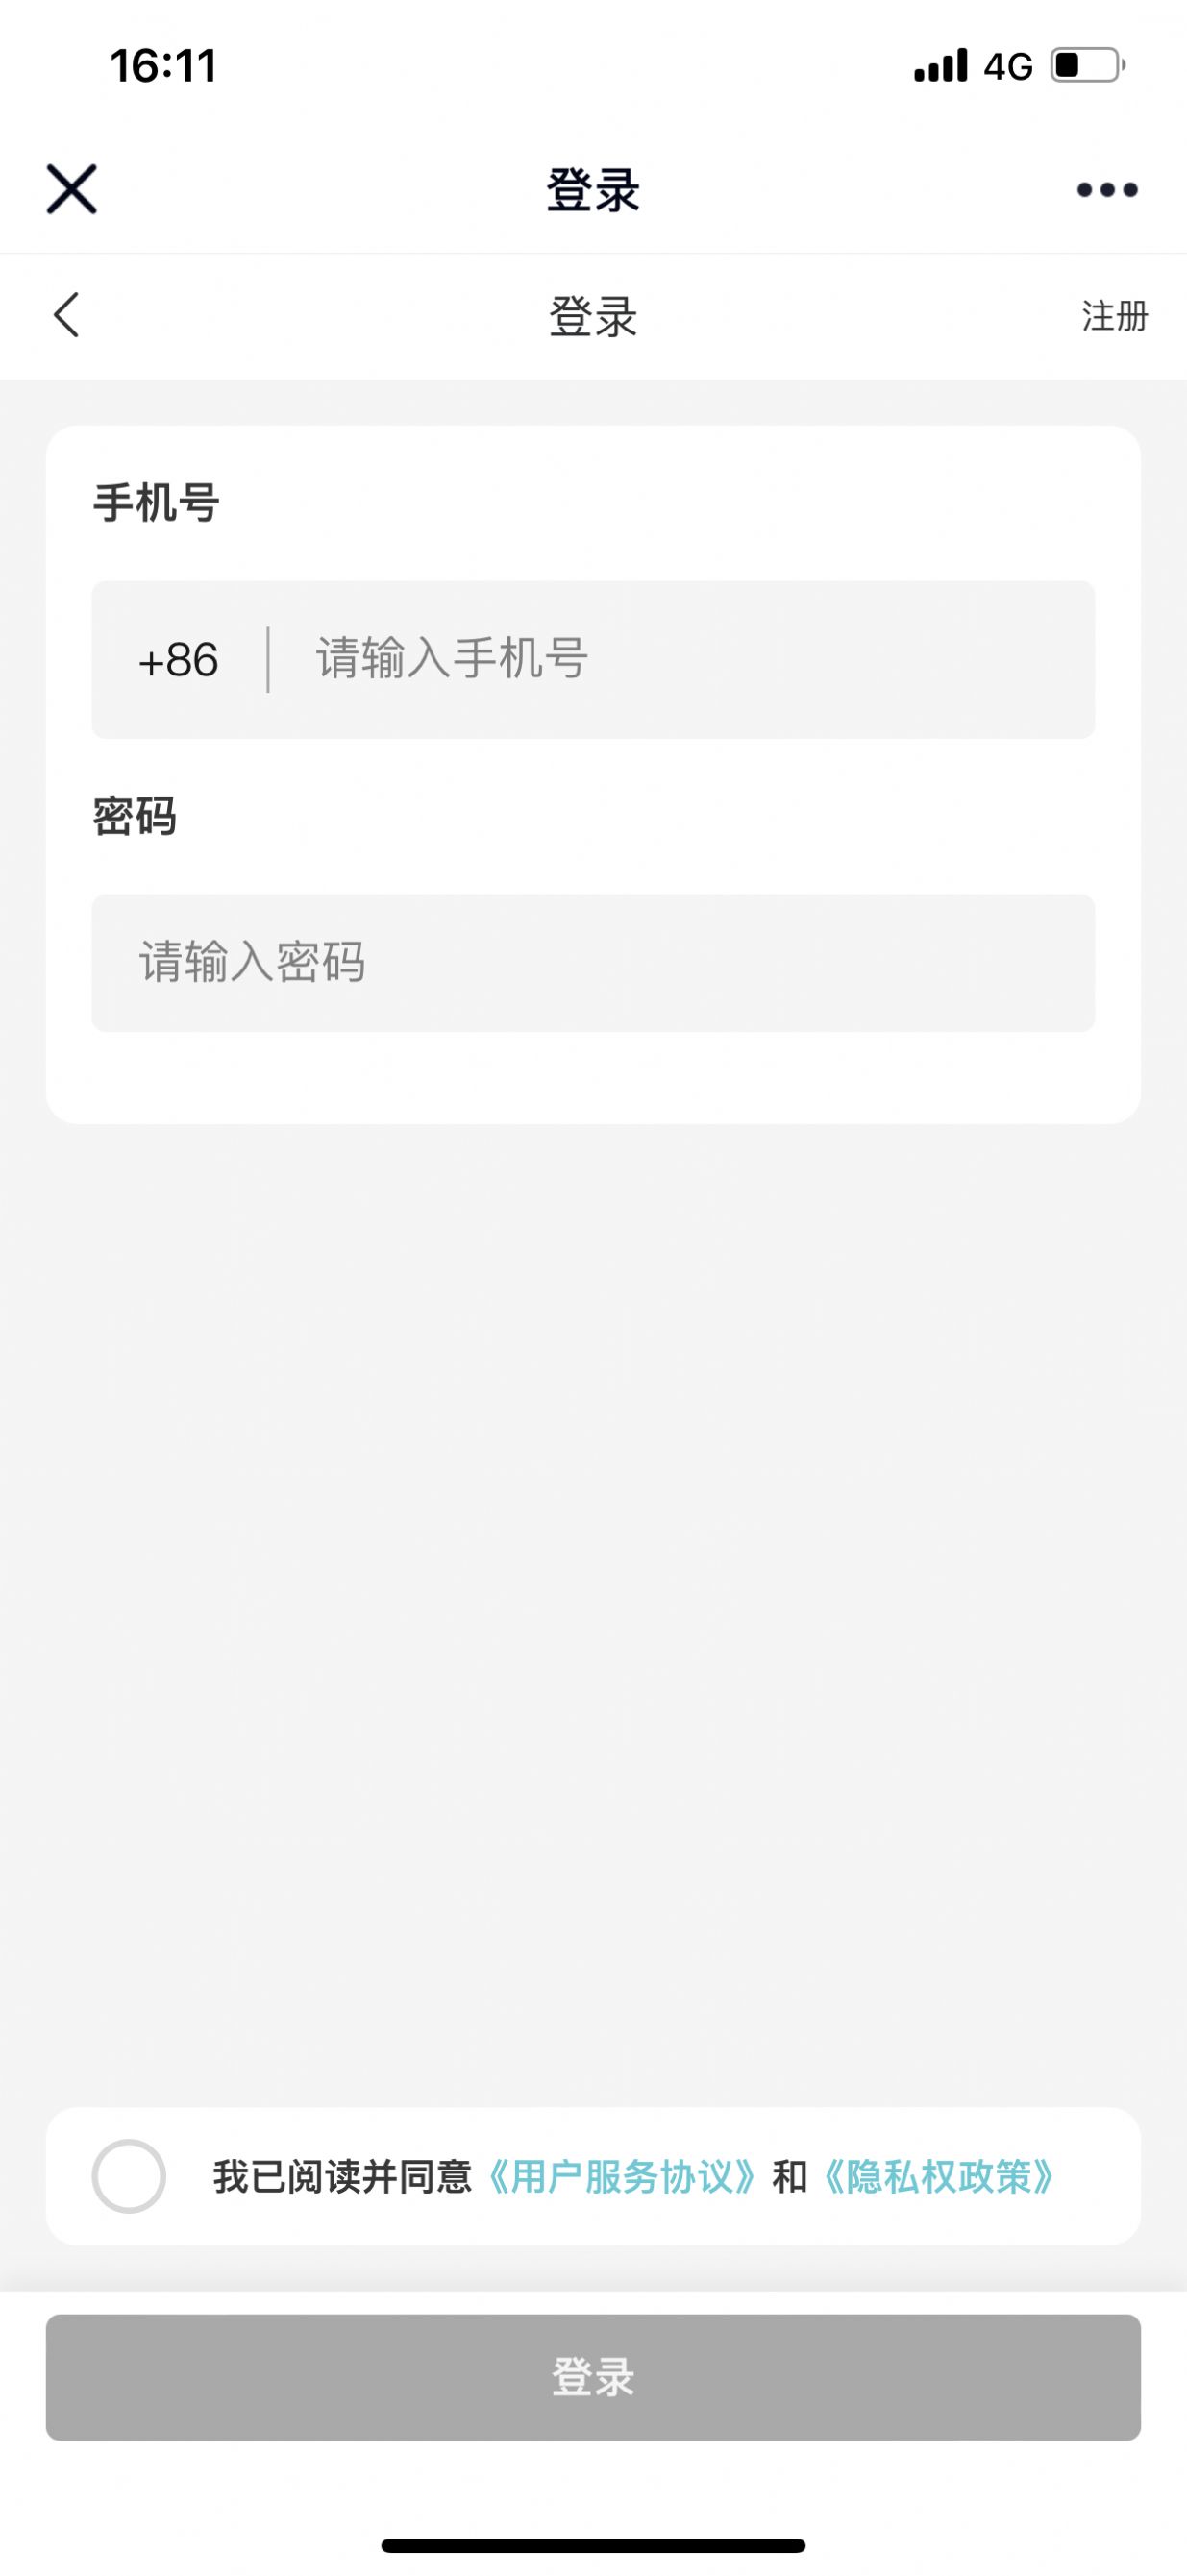 taometa数藏平台app官方版图1: